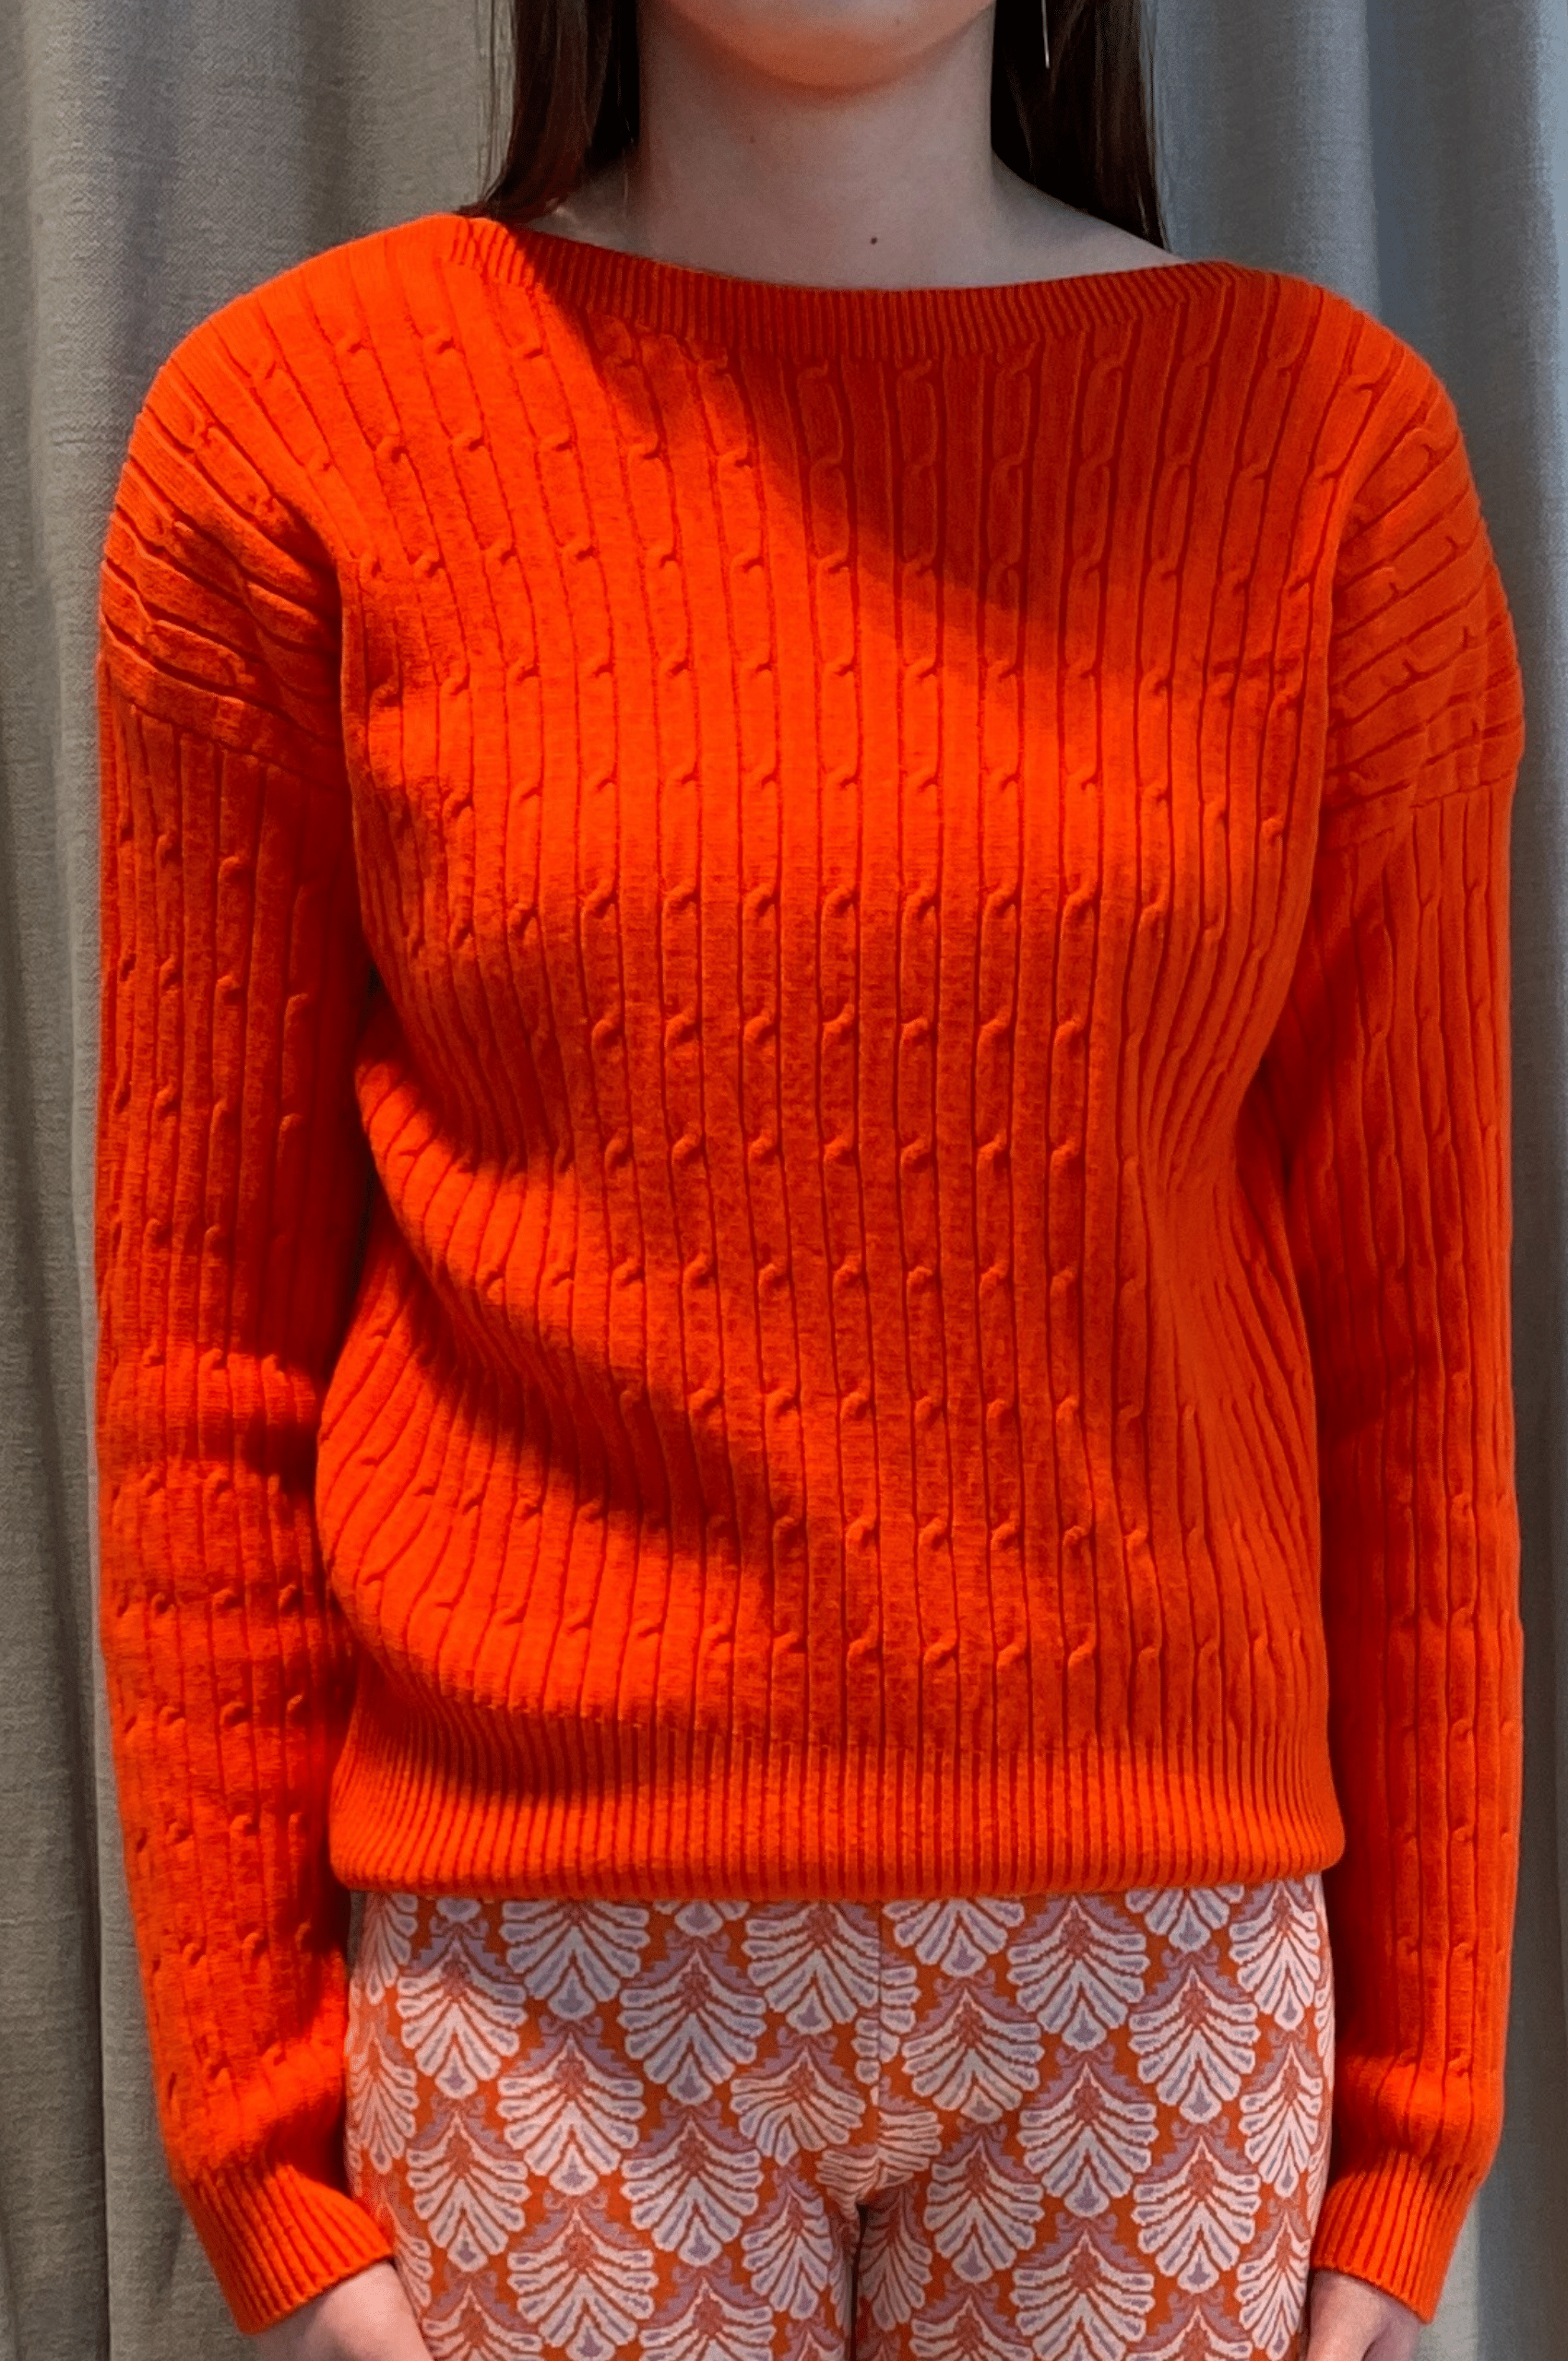 Image Pink Couture gebreide trui oranje